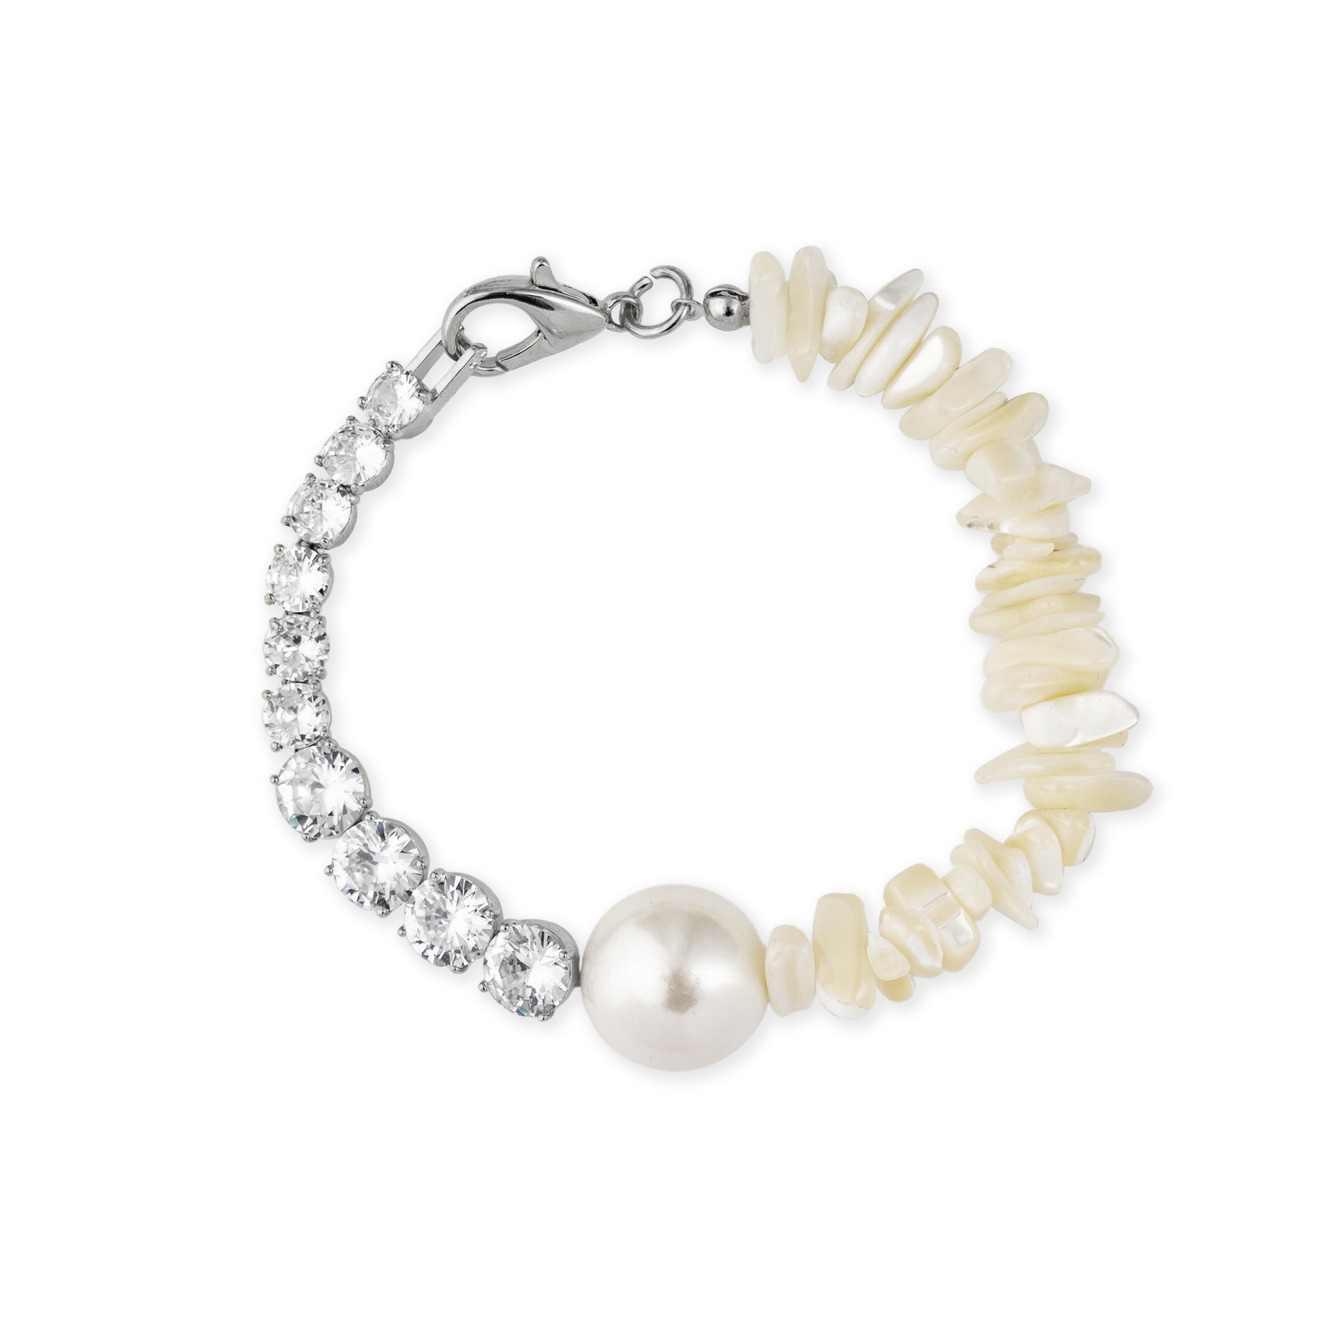 Free Form Jewelry Серебристый браслет с перламутром, жемчугом и кристаллами lisa smith серебристый браслет цепь с кристаллами